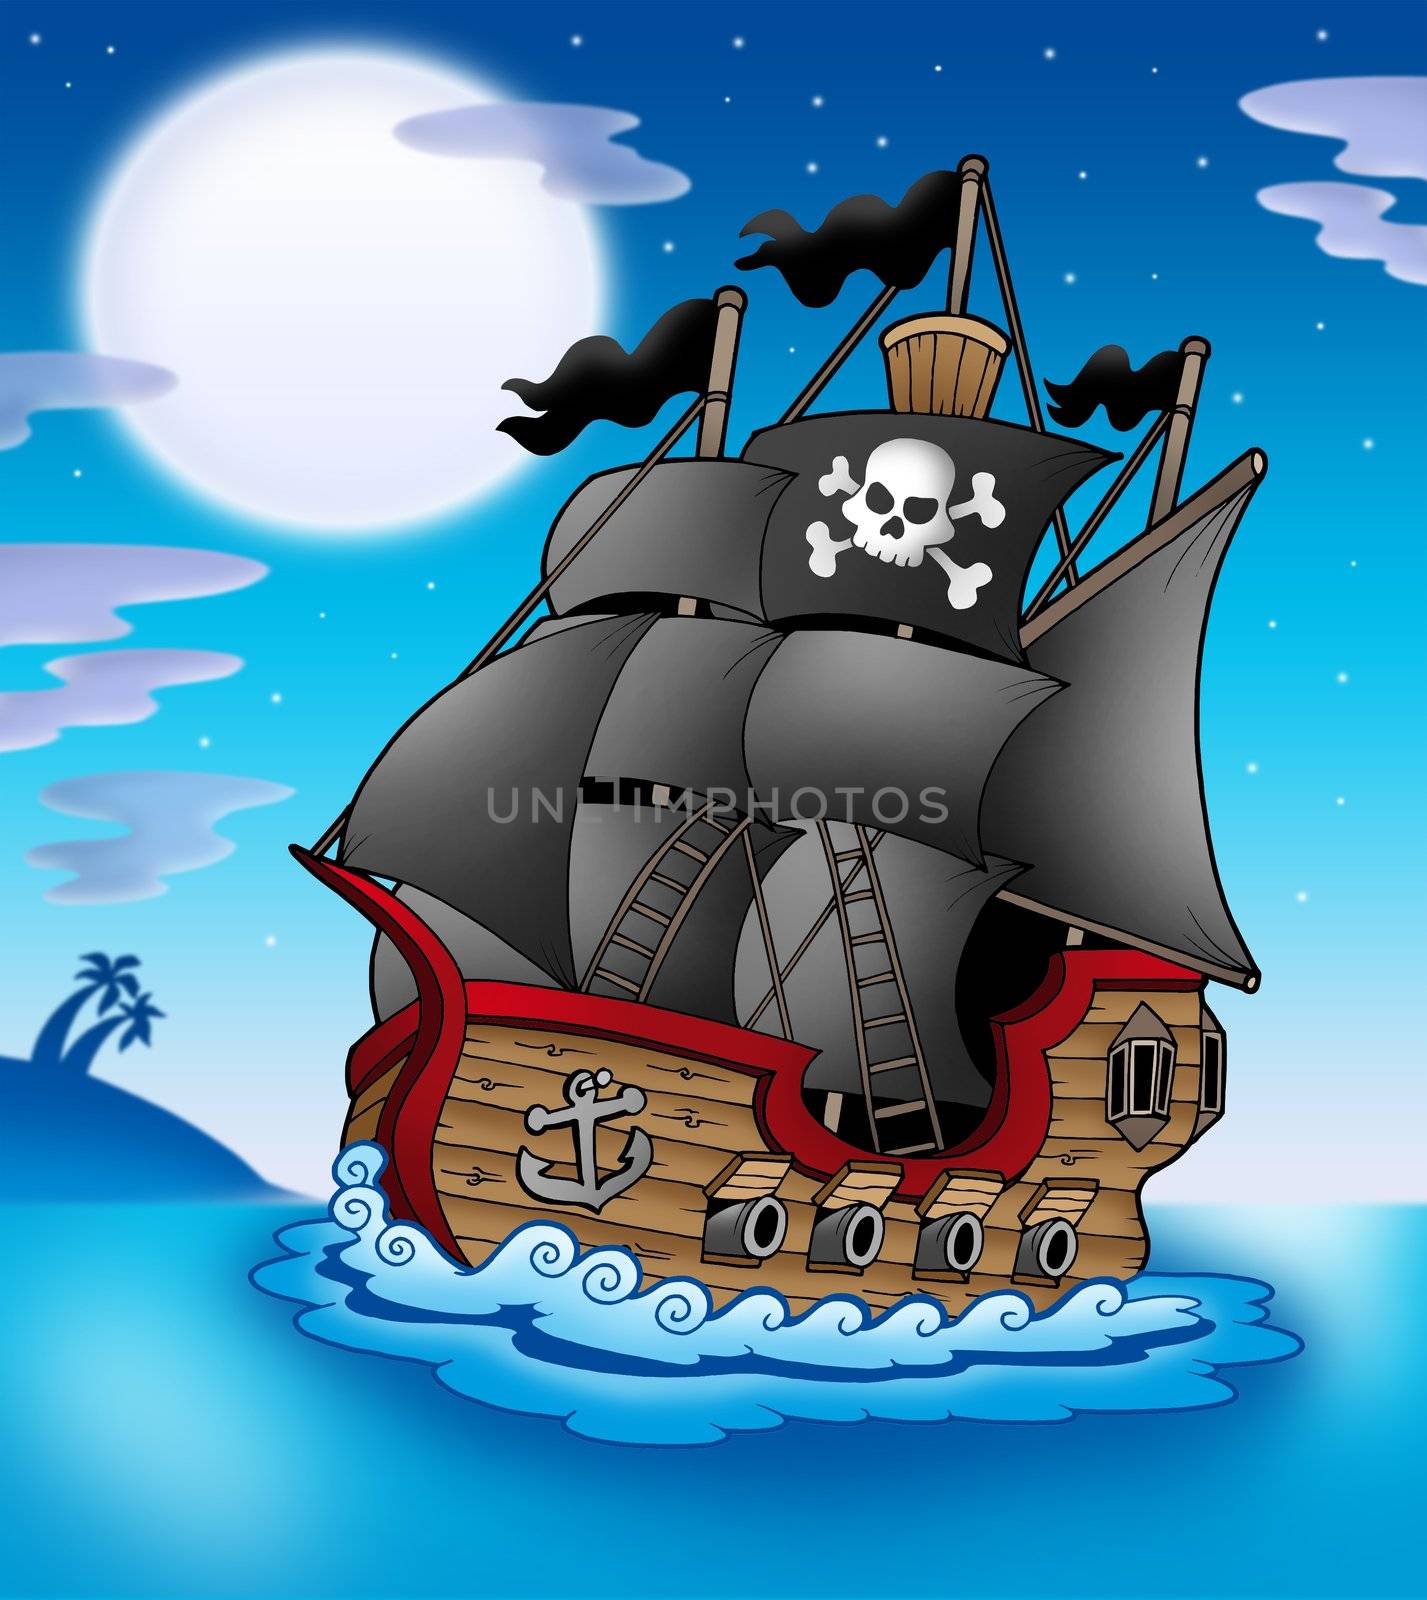 Pirate vessel at night - color illustration.